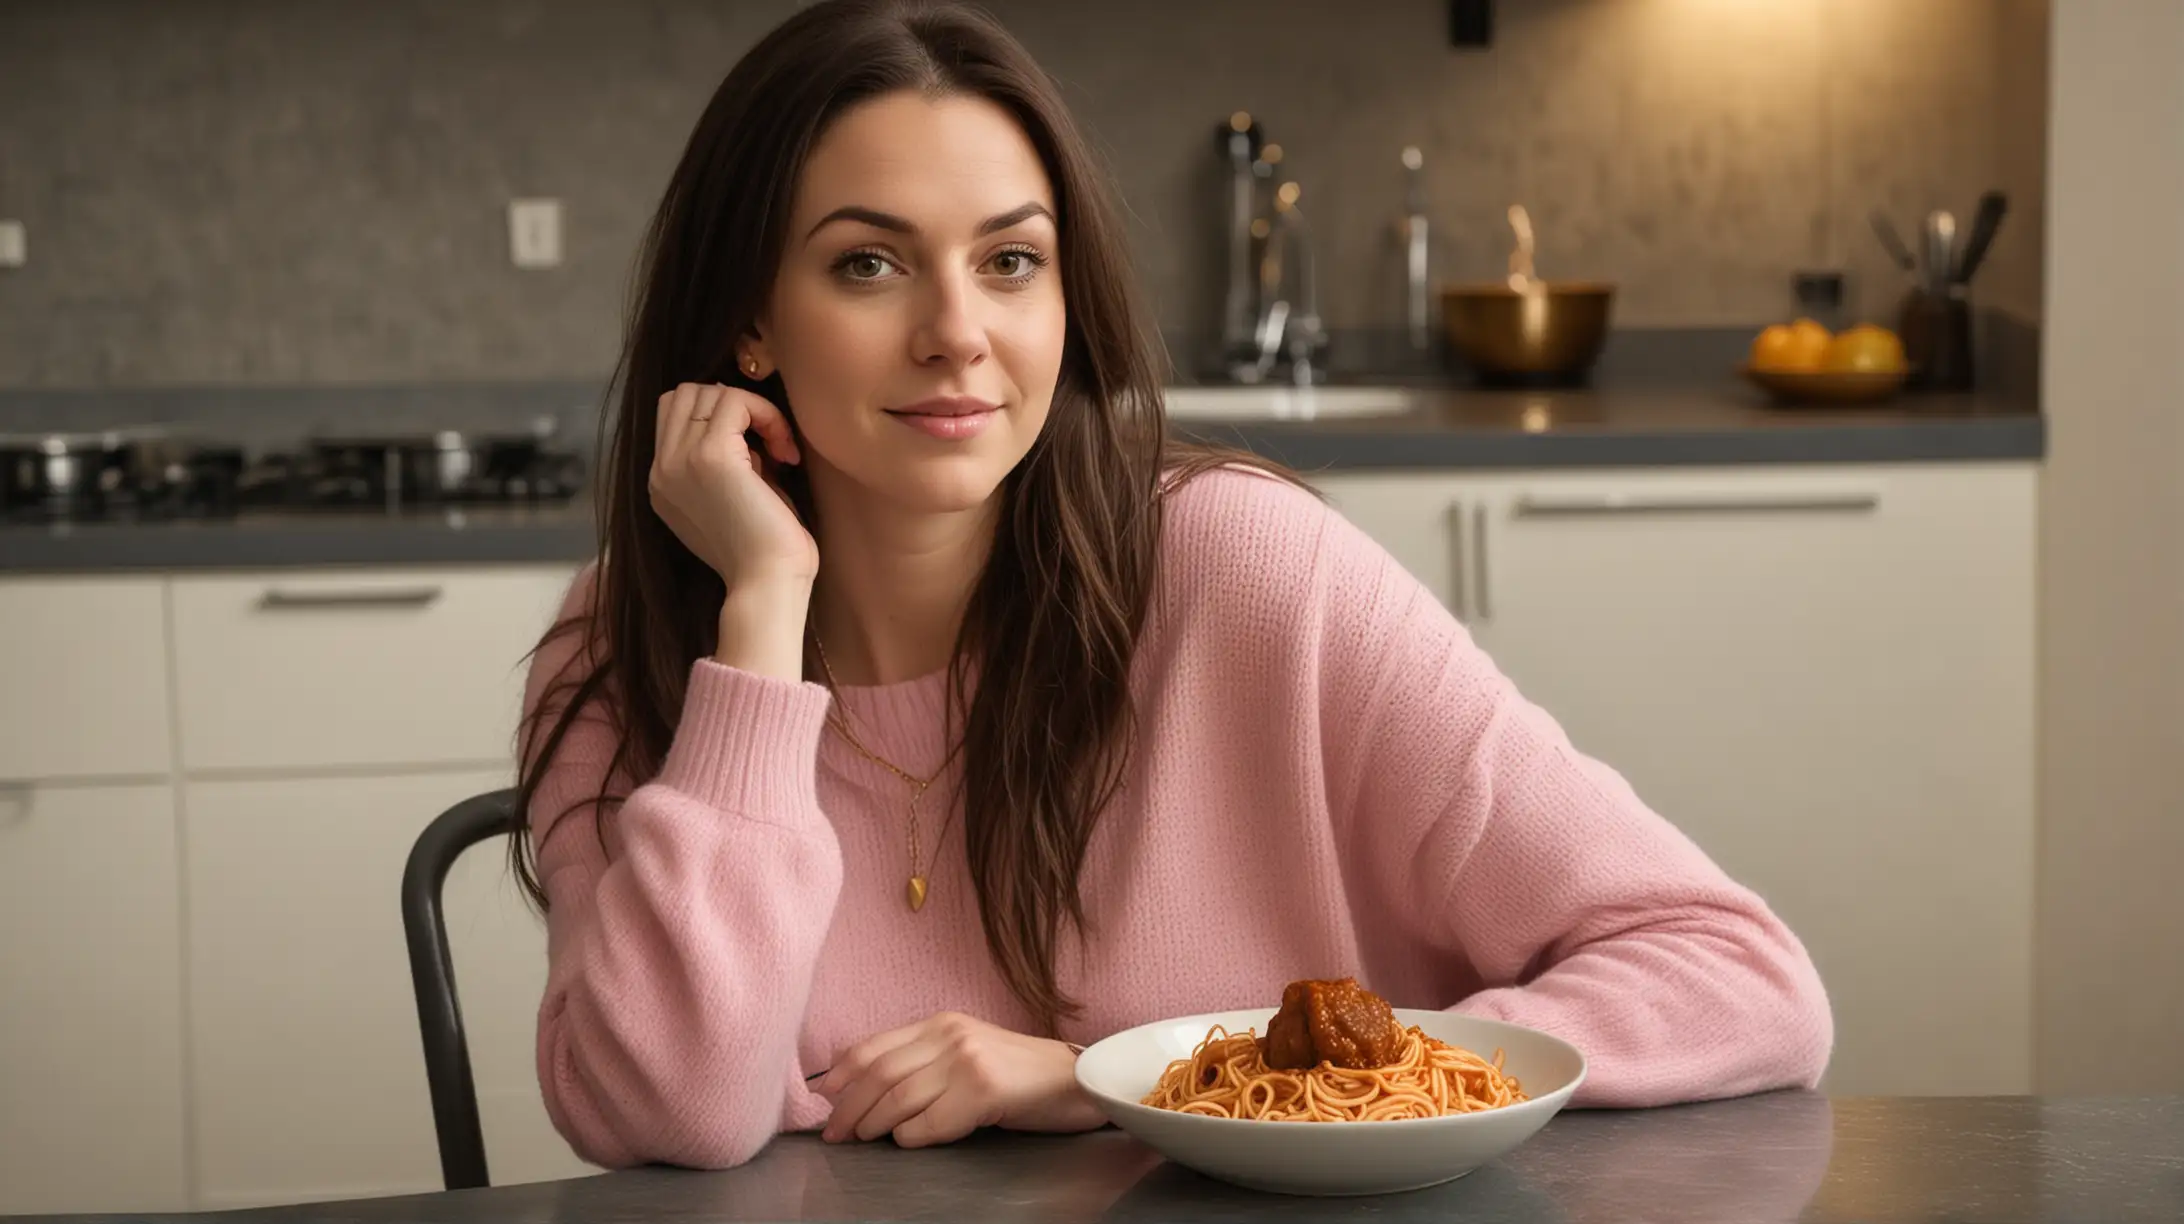 Young Woman Enjoying Spaghetti and Meatballs in Modern Kitchen Setting